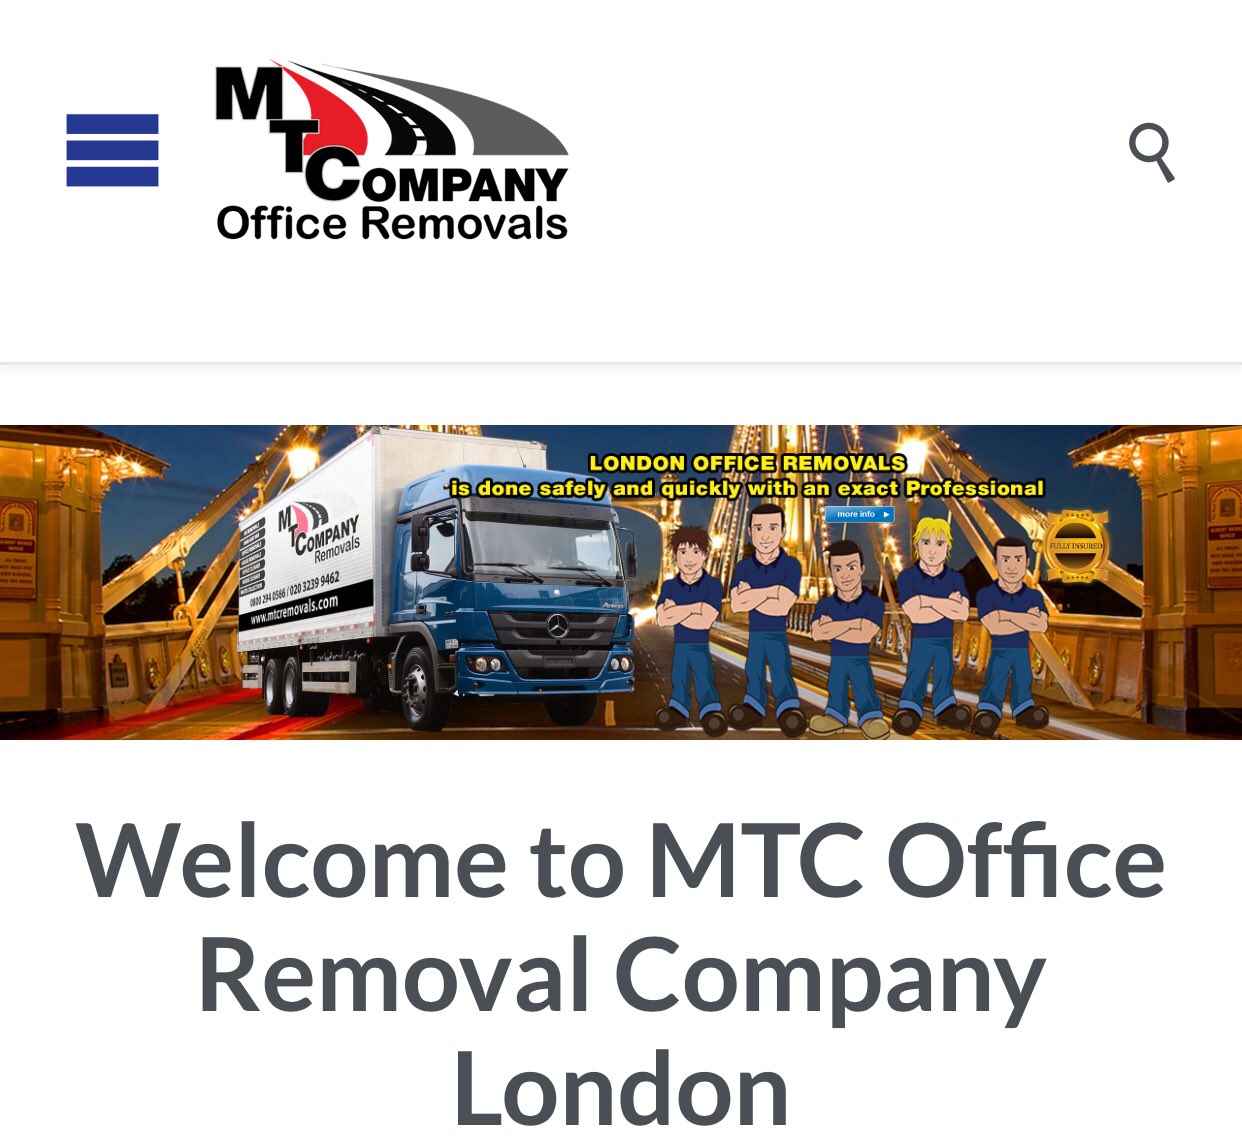 MTC Office Removals (@MtcOffice) / Twitter